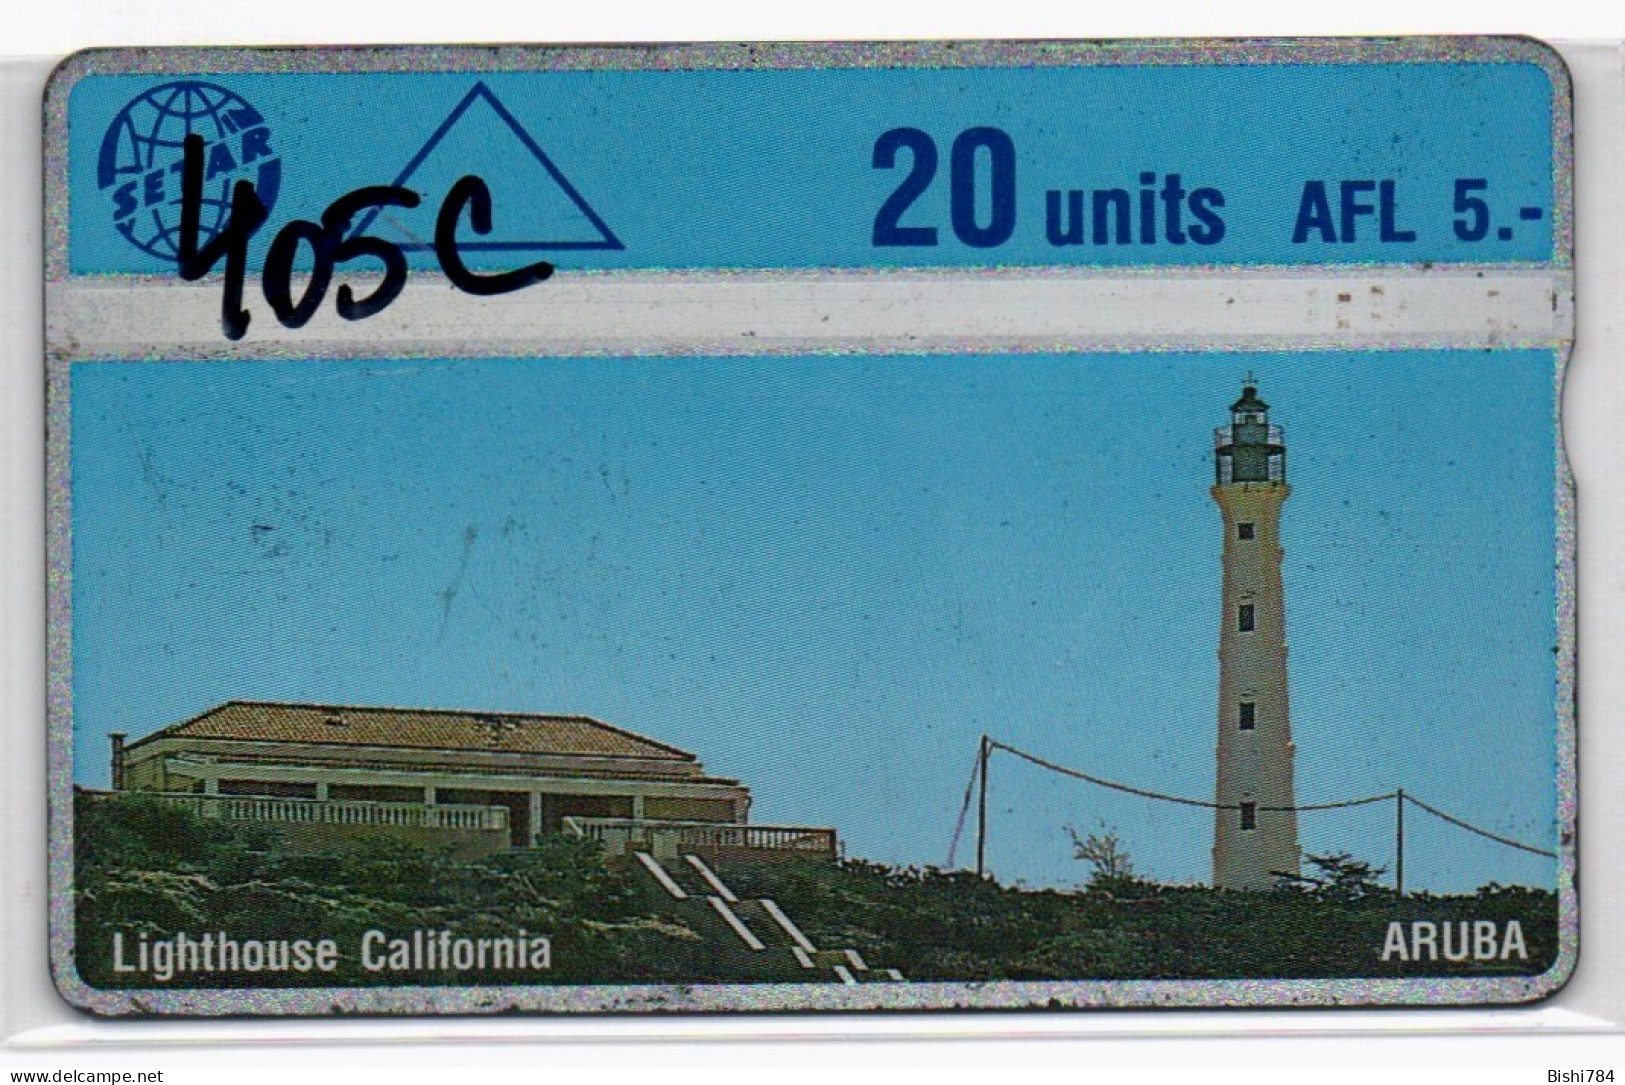 Aruba - Lighthouse California - 405C - Aruba